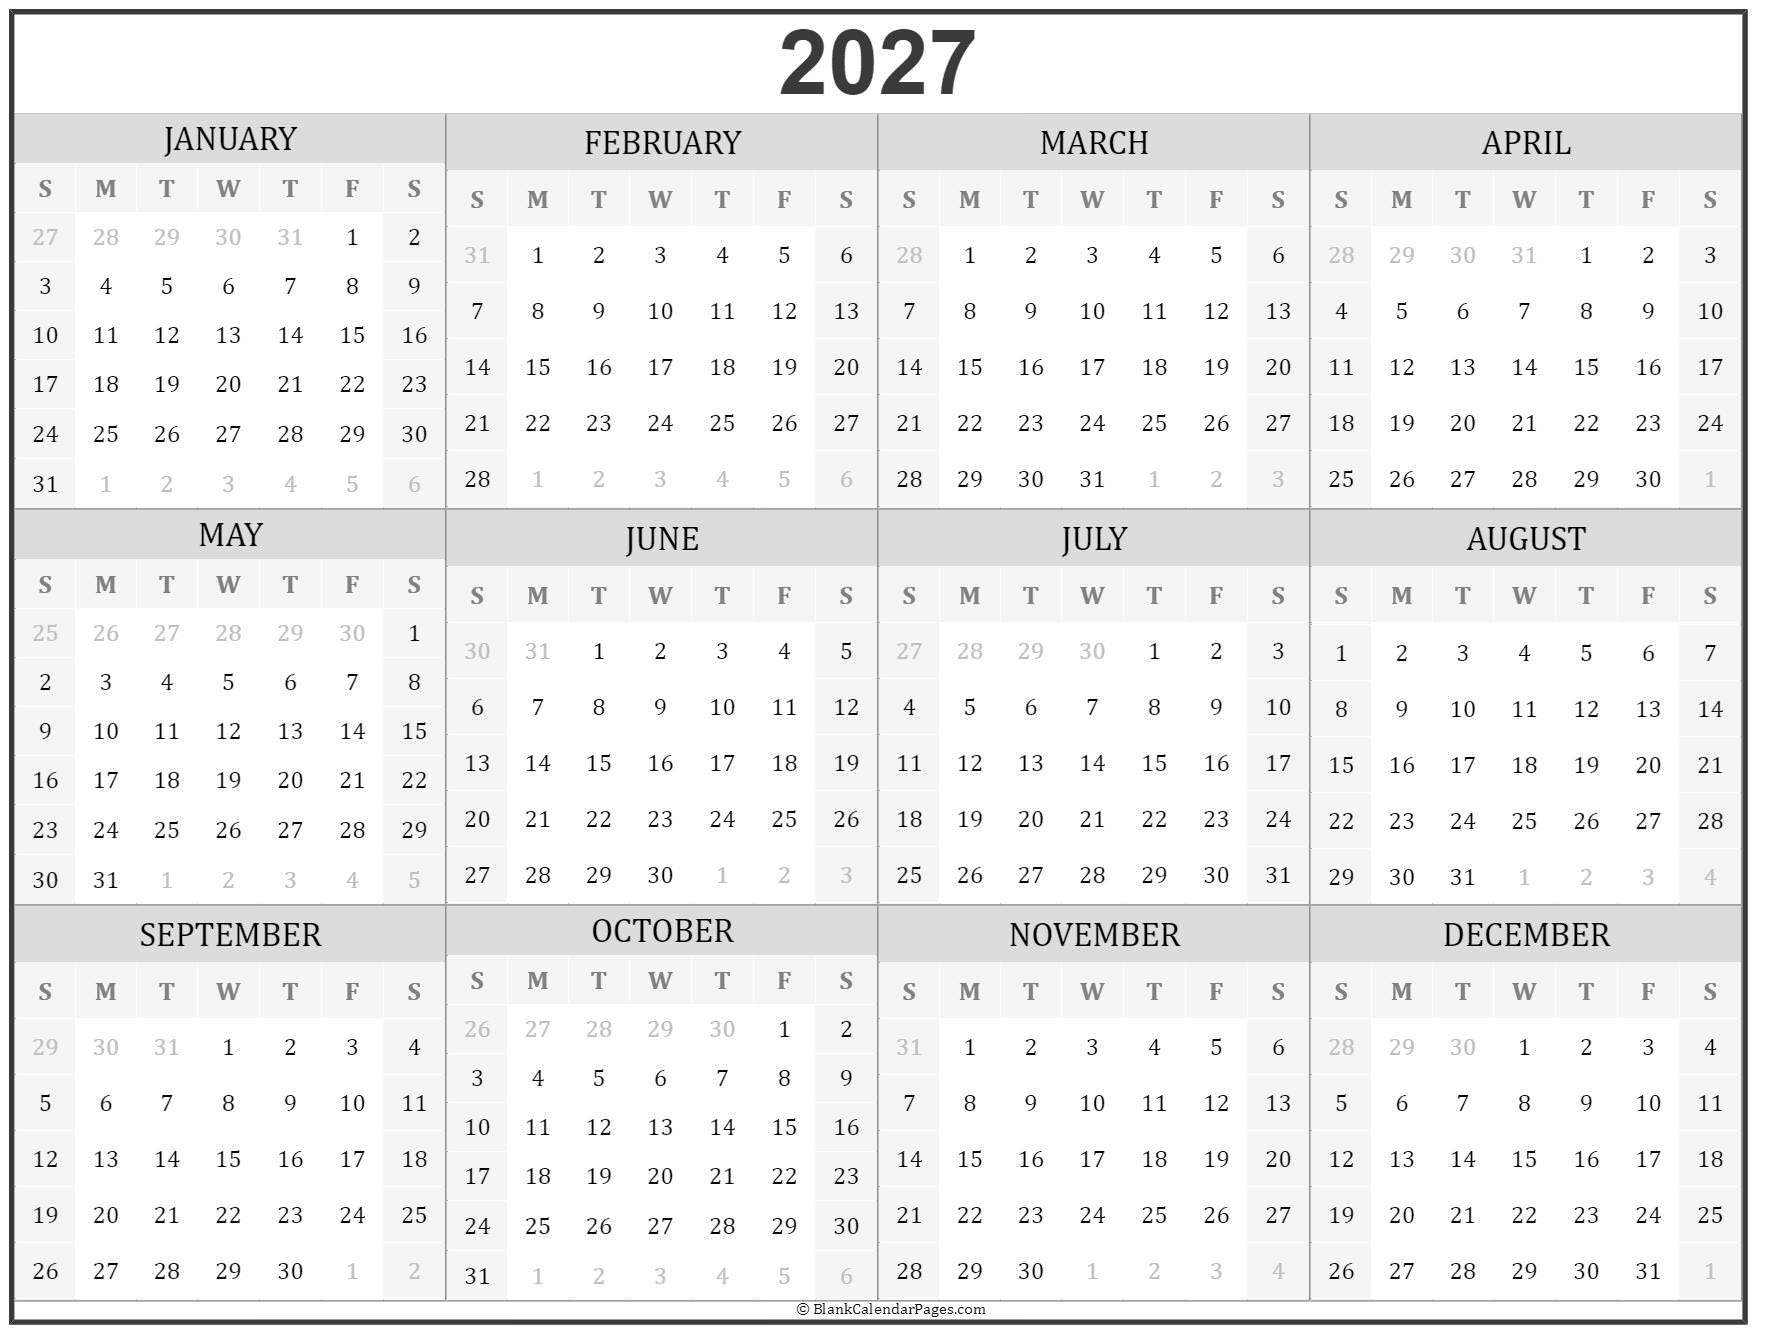 2027-year-calendar-yearly-printable-gambaran